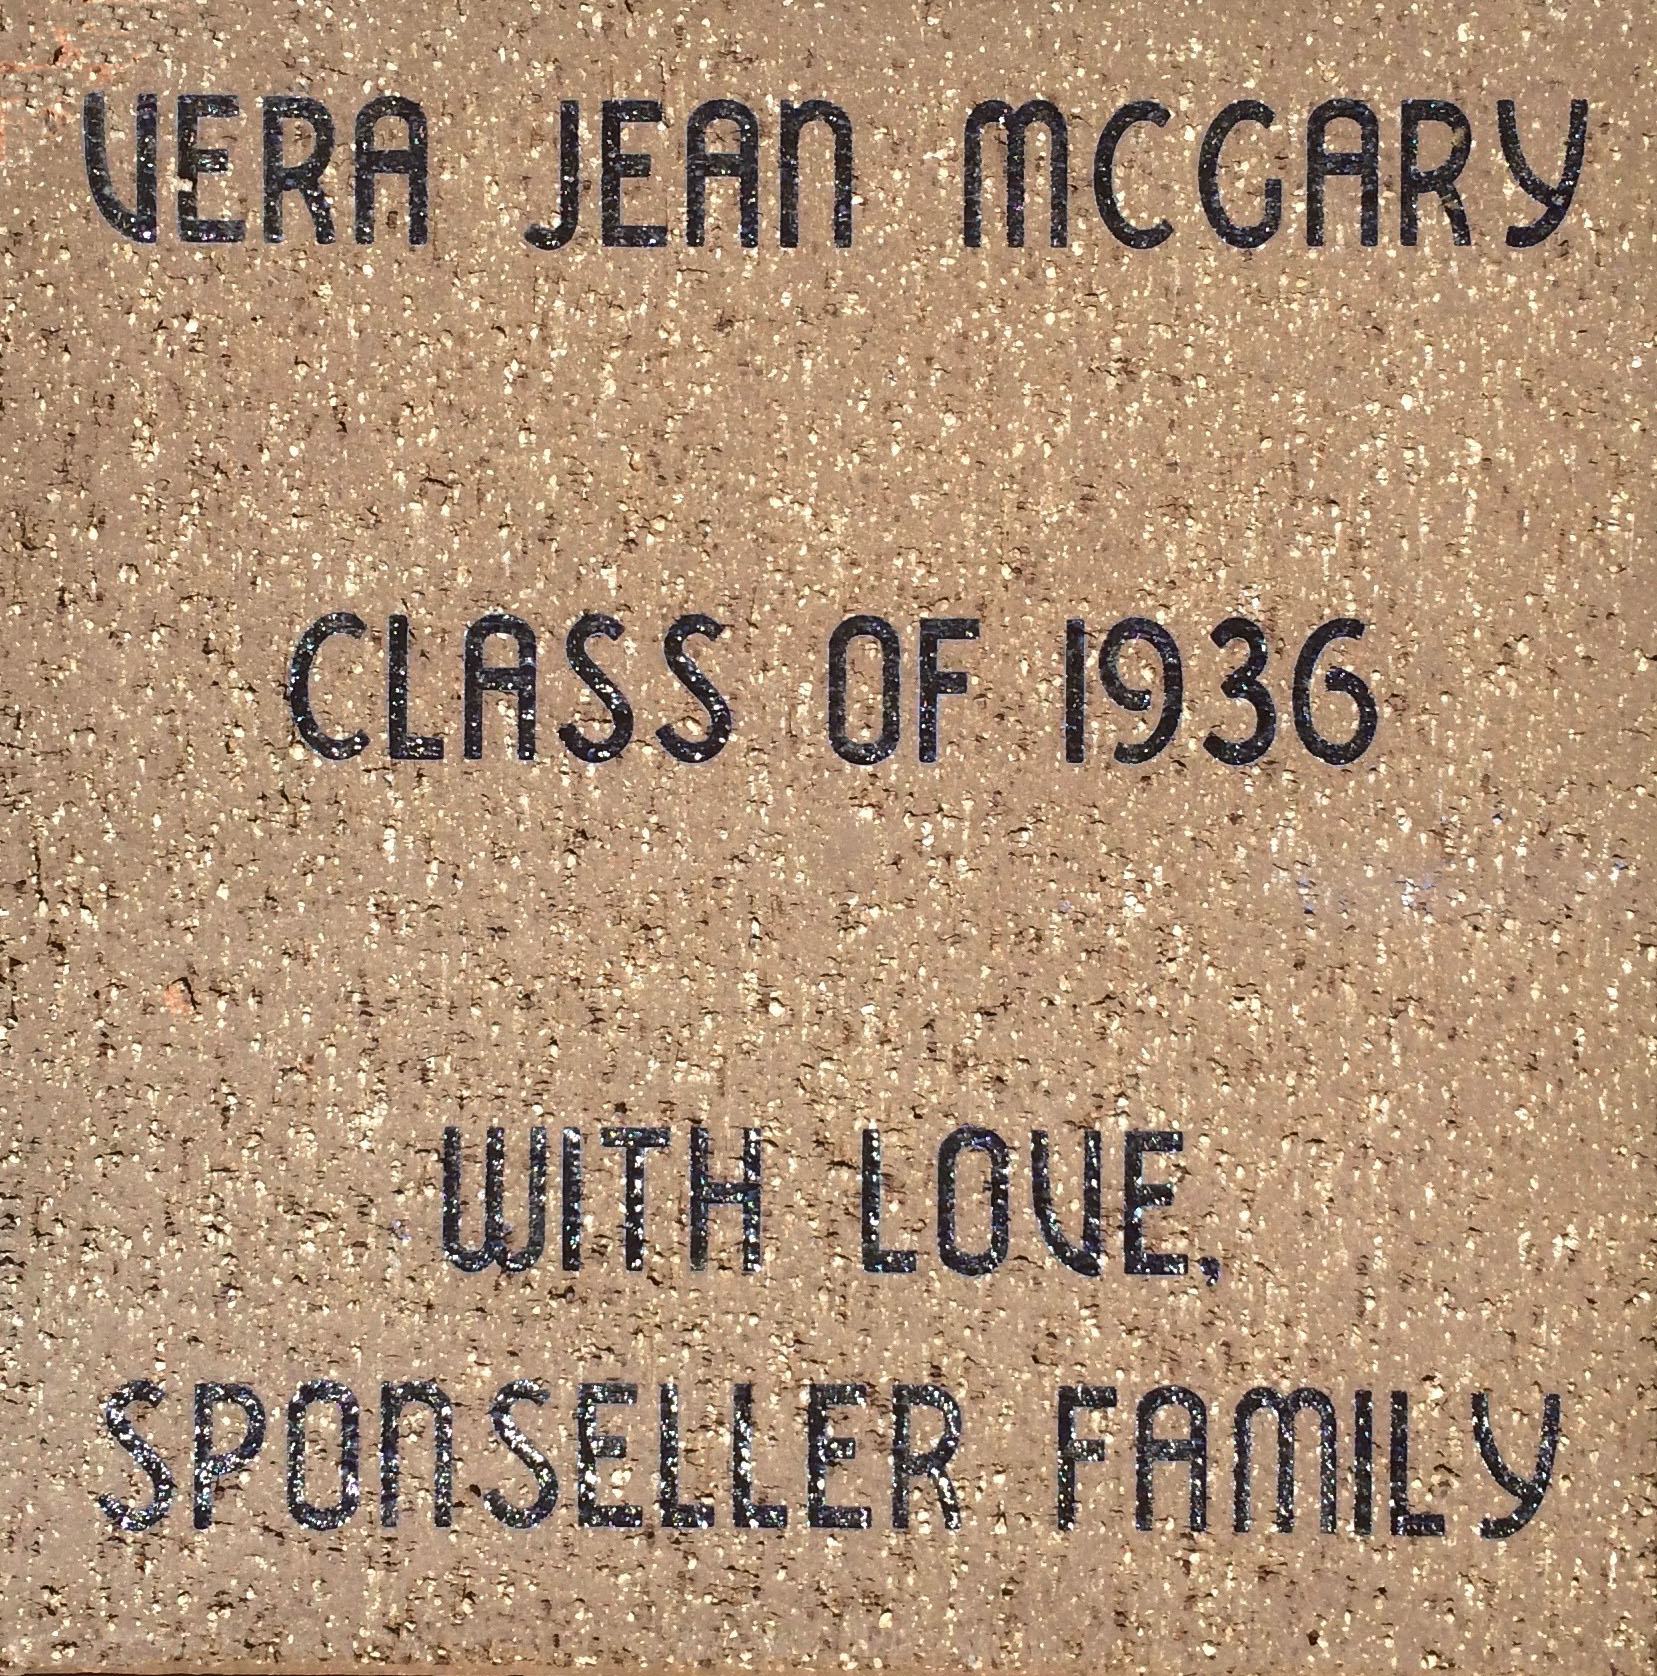 McGary, Vera Jean